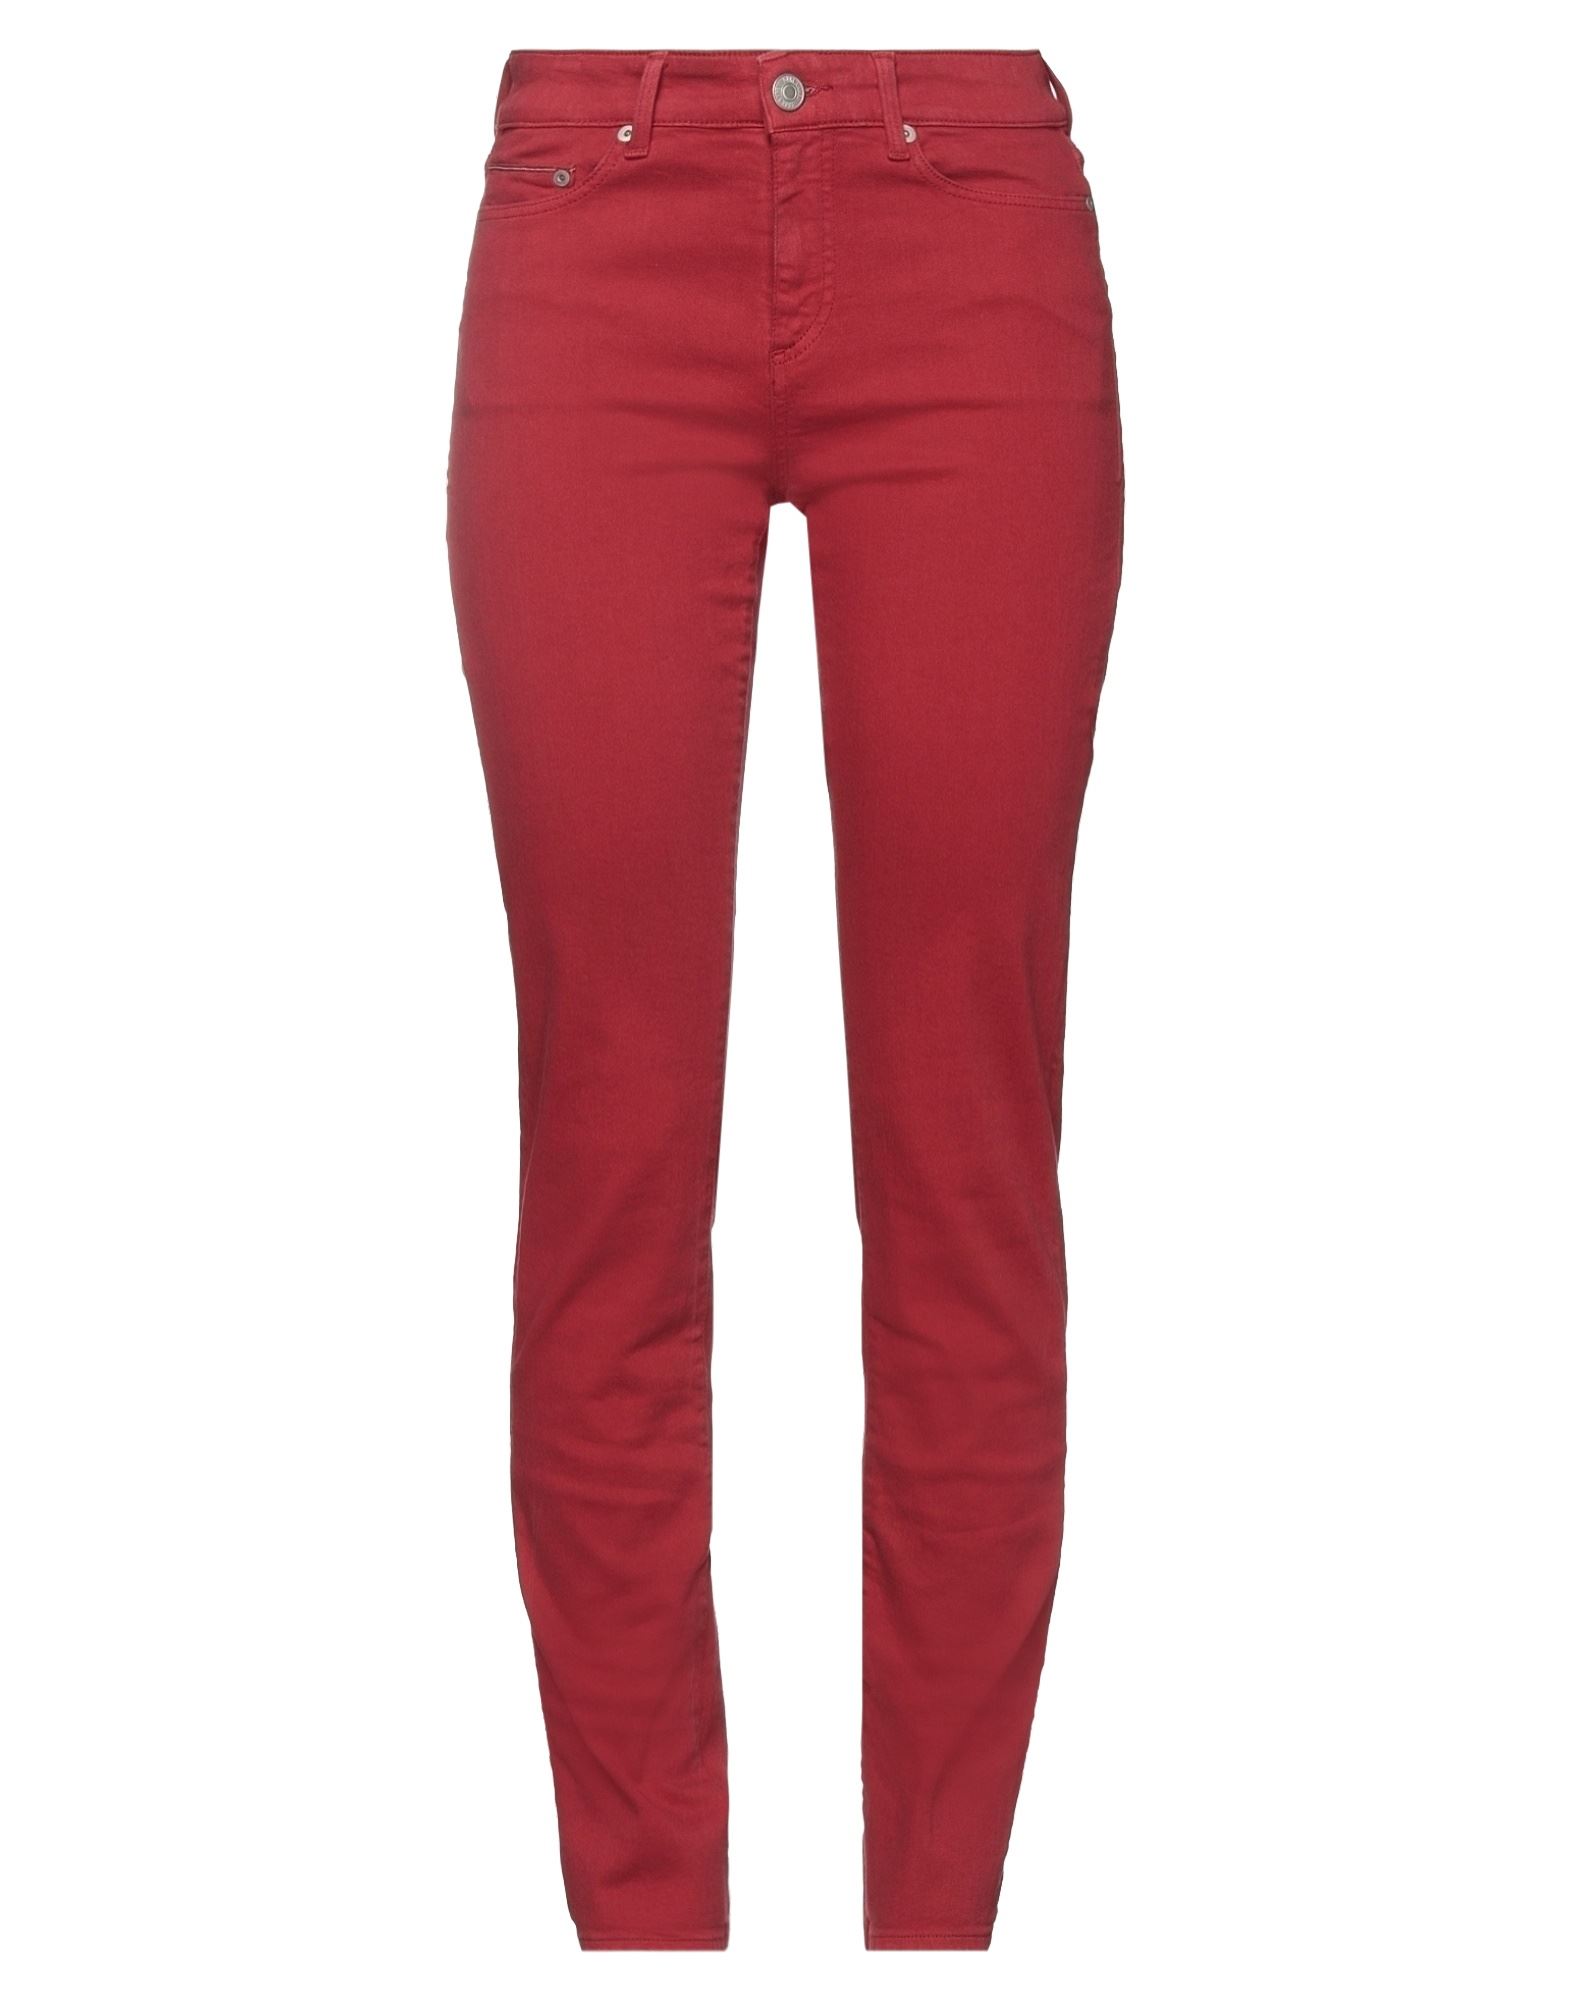 Shop Care Label Woman Pants Red Size 29 Cotton, Pbt - Polybutylene Terephthalate, Elastane